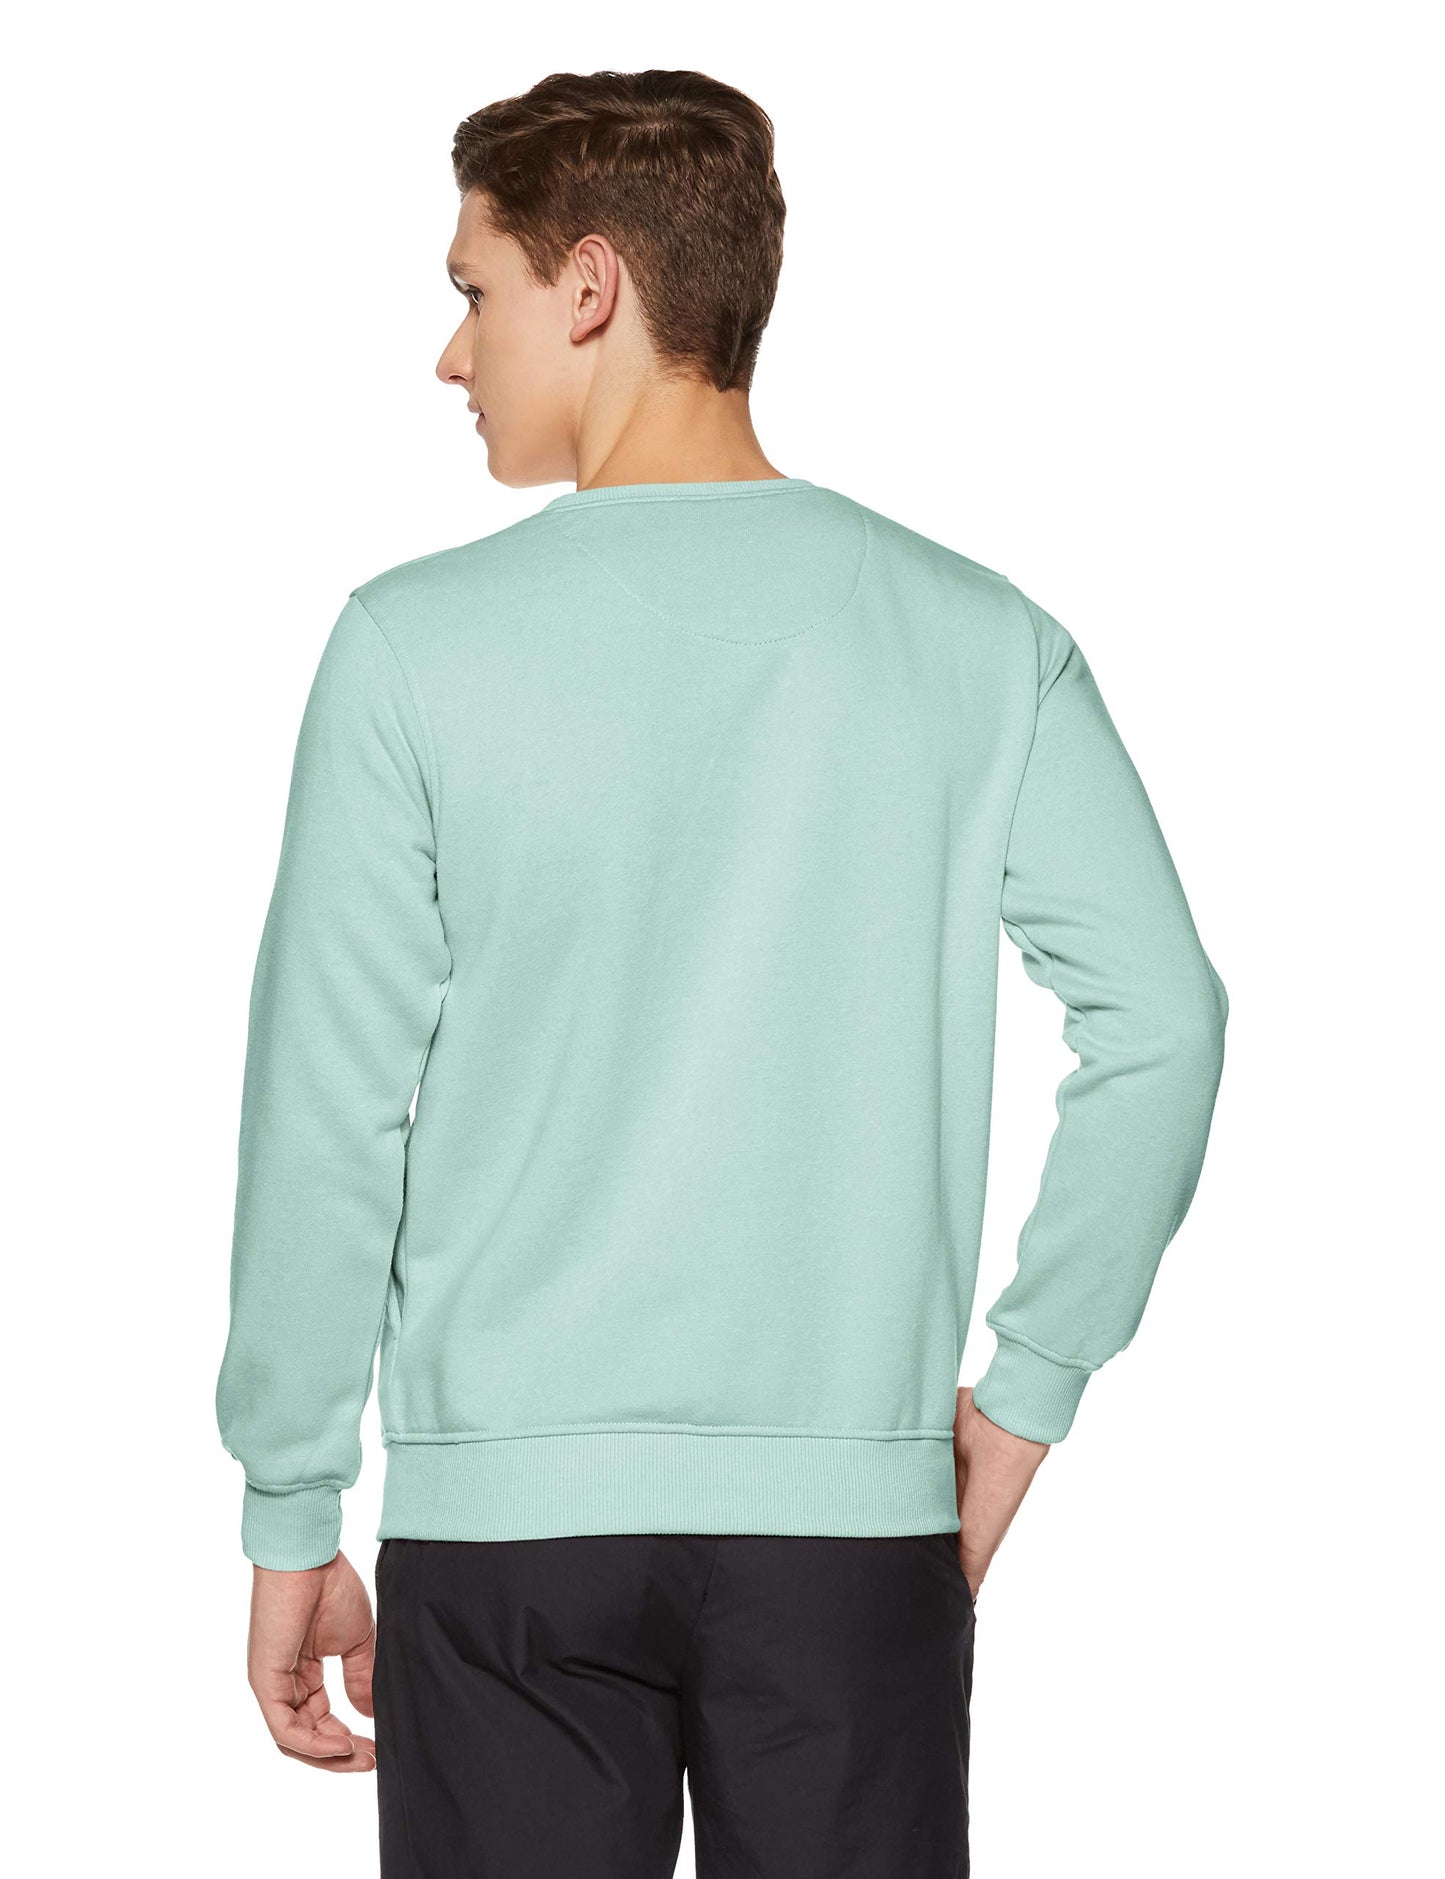 Qube By Fort Collins Men's Sweatshirt (929250 SMU_Green Milange_L)